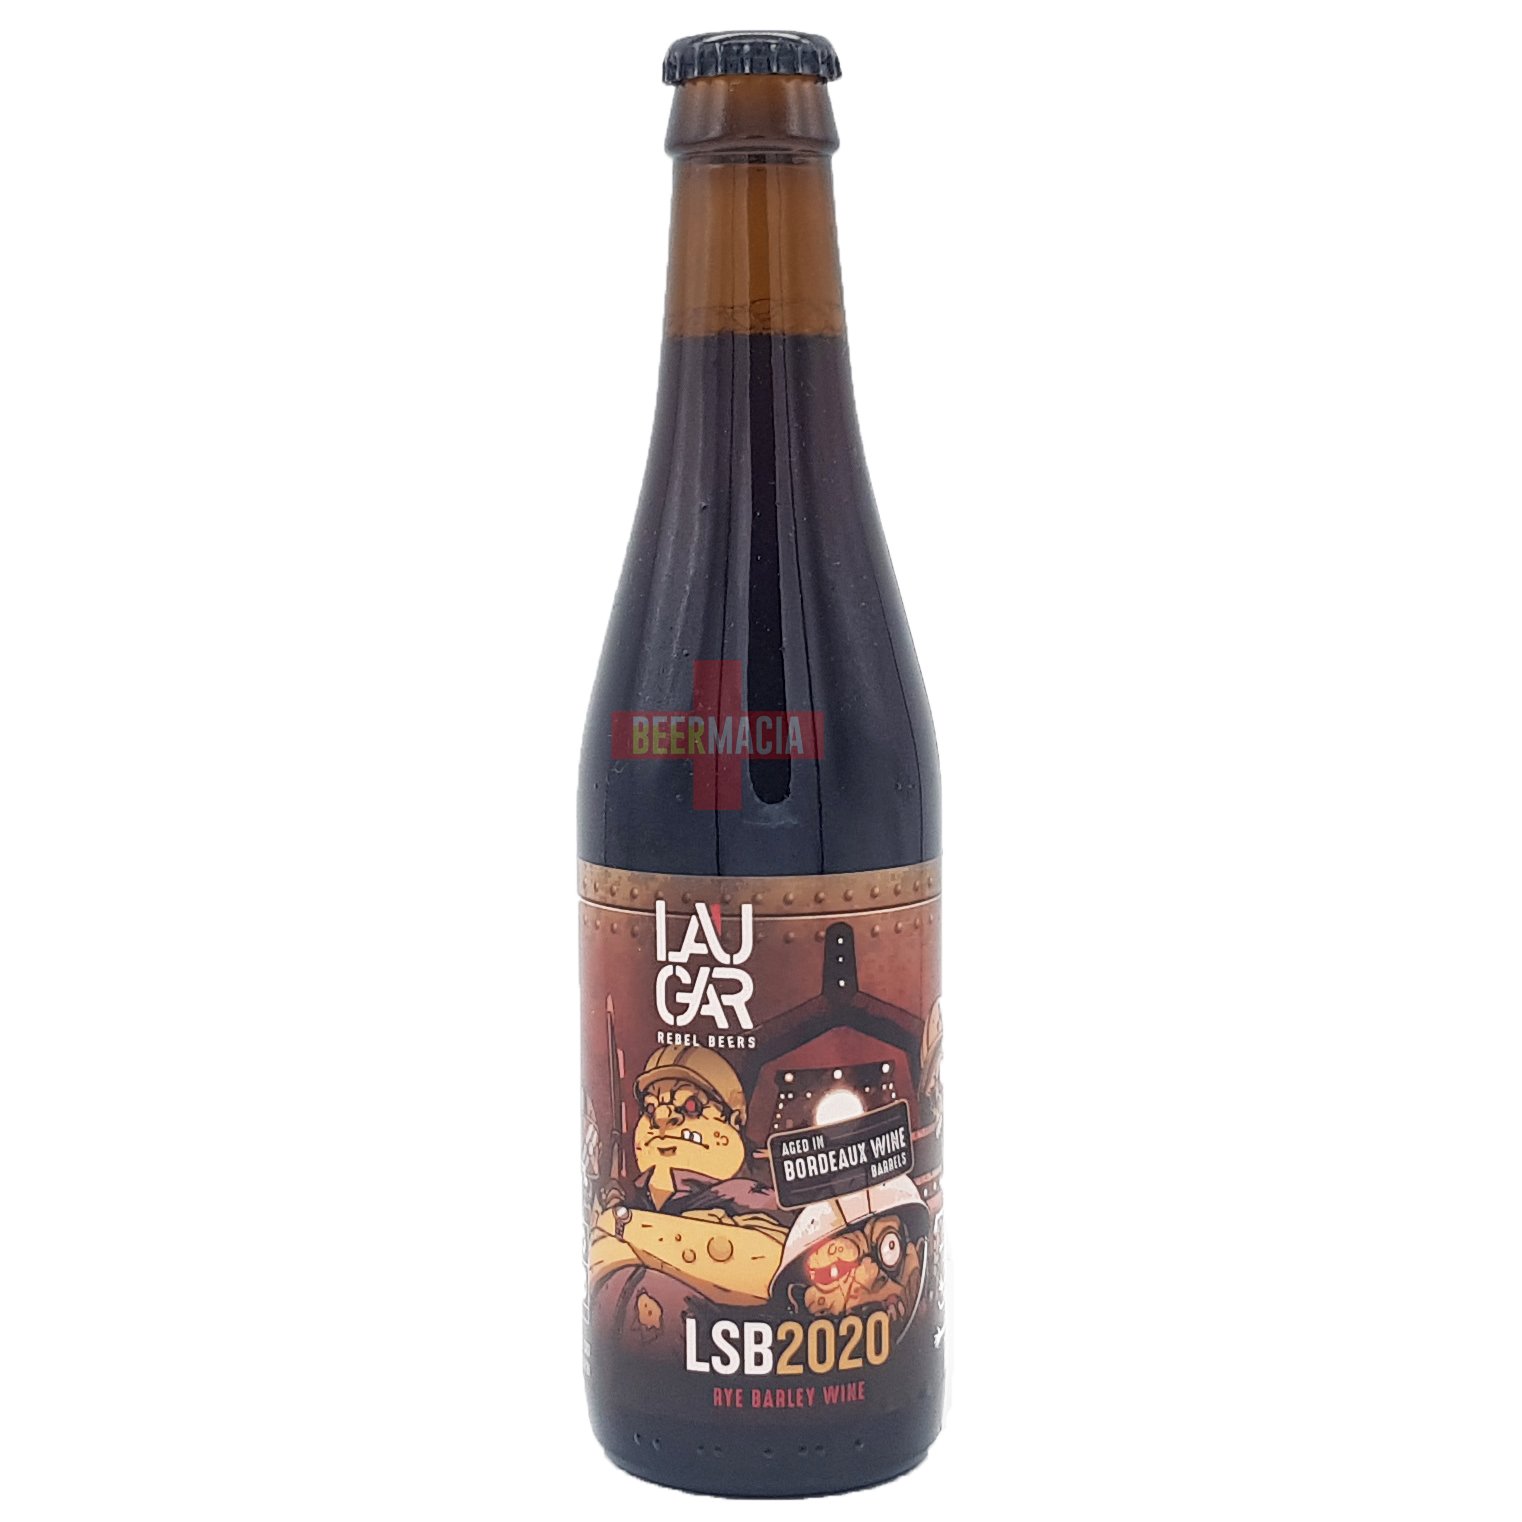 Laugar Brewery - LSB 2020 33cl